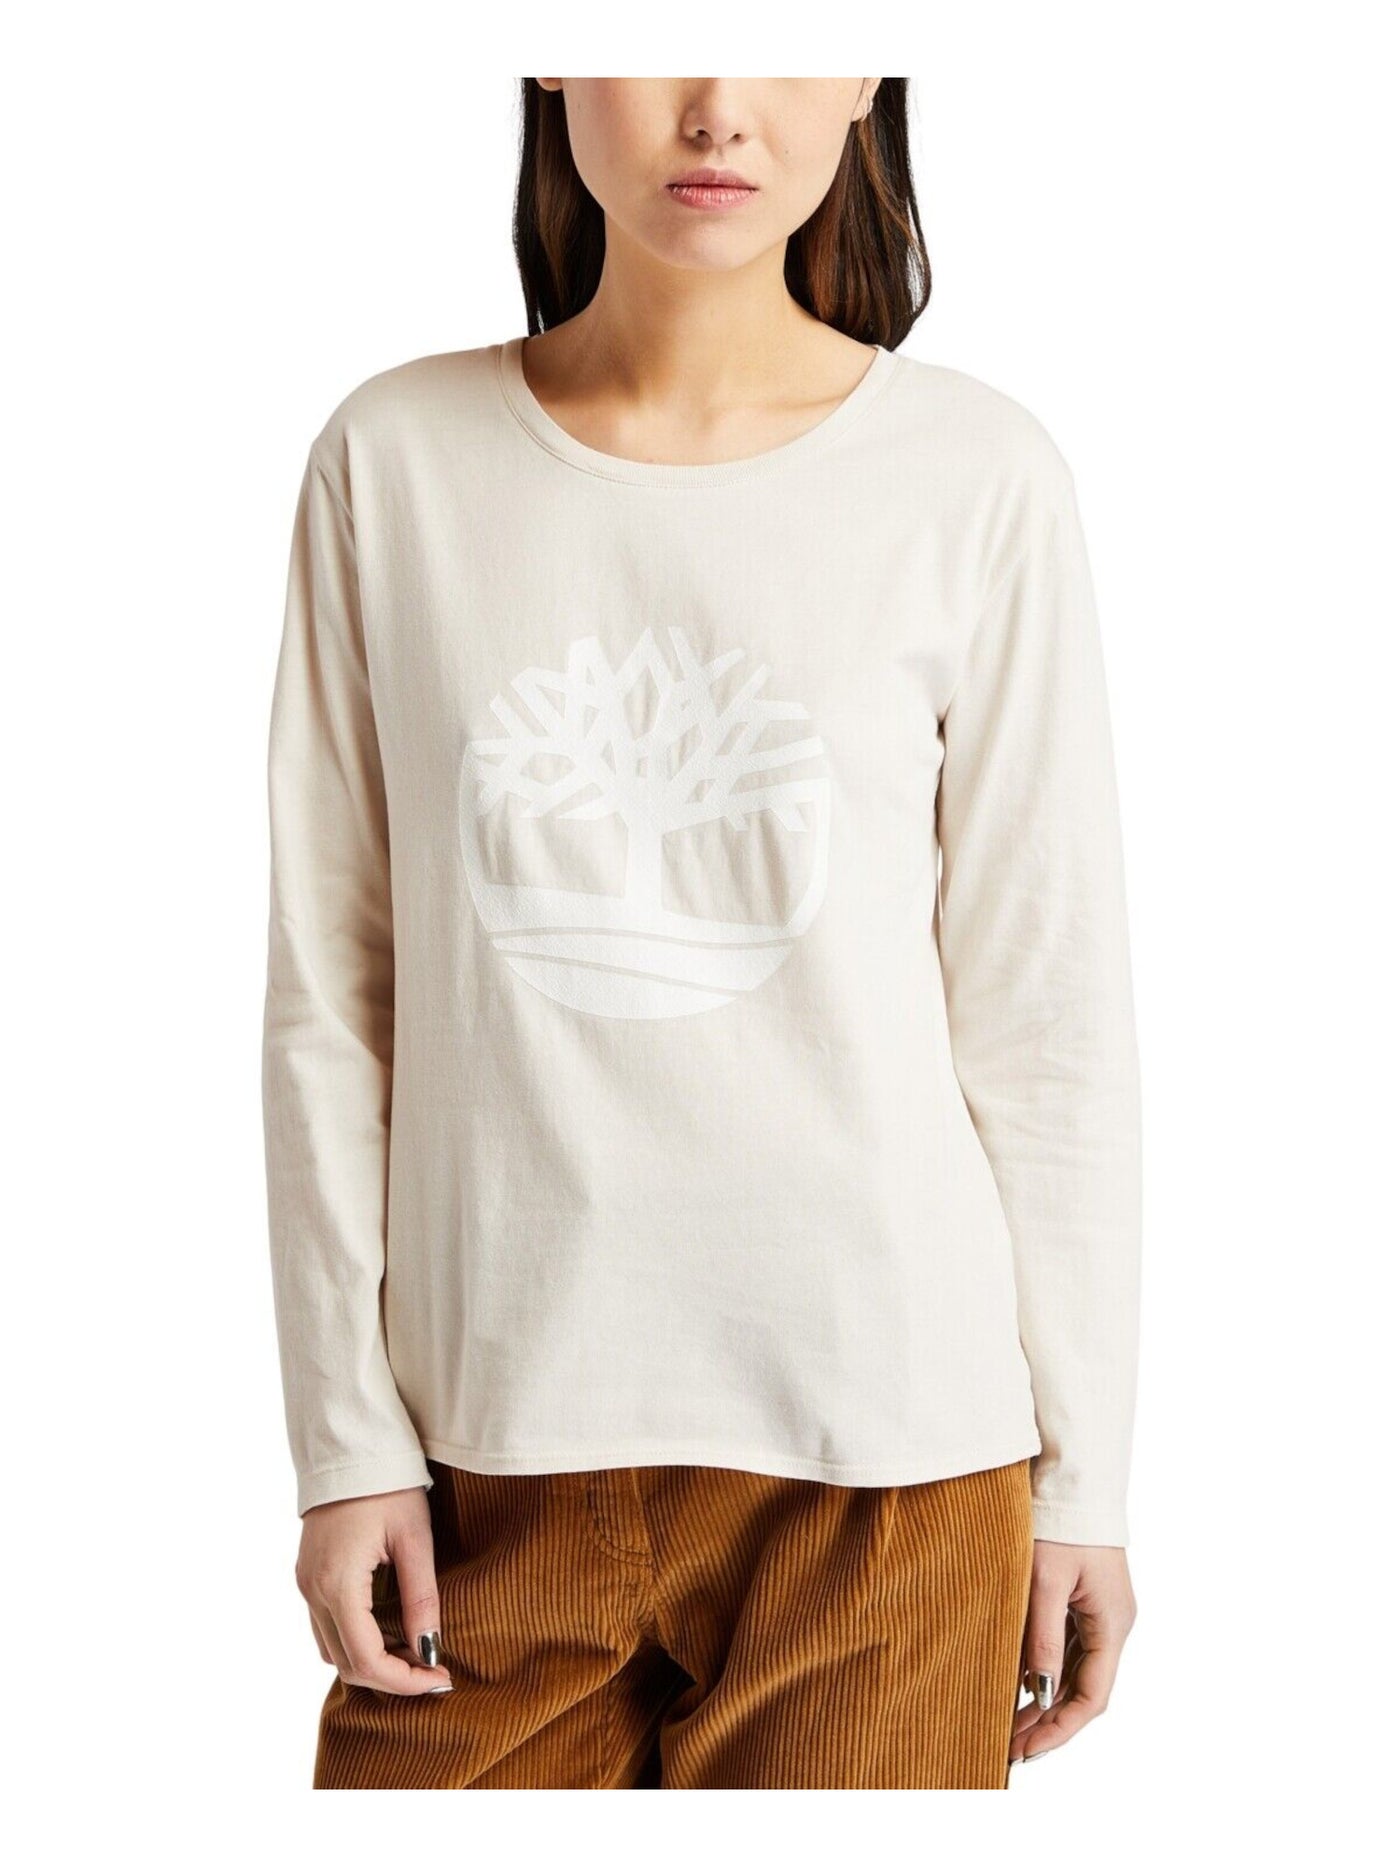 TIMBERLAND Womens Beige Logo Graphic Long Sleeve Round Neck T-Shirt SP